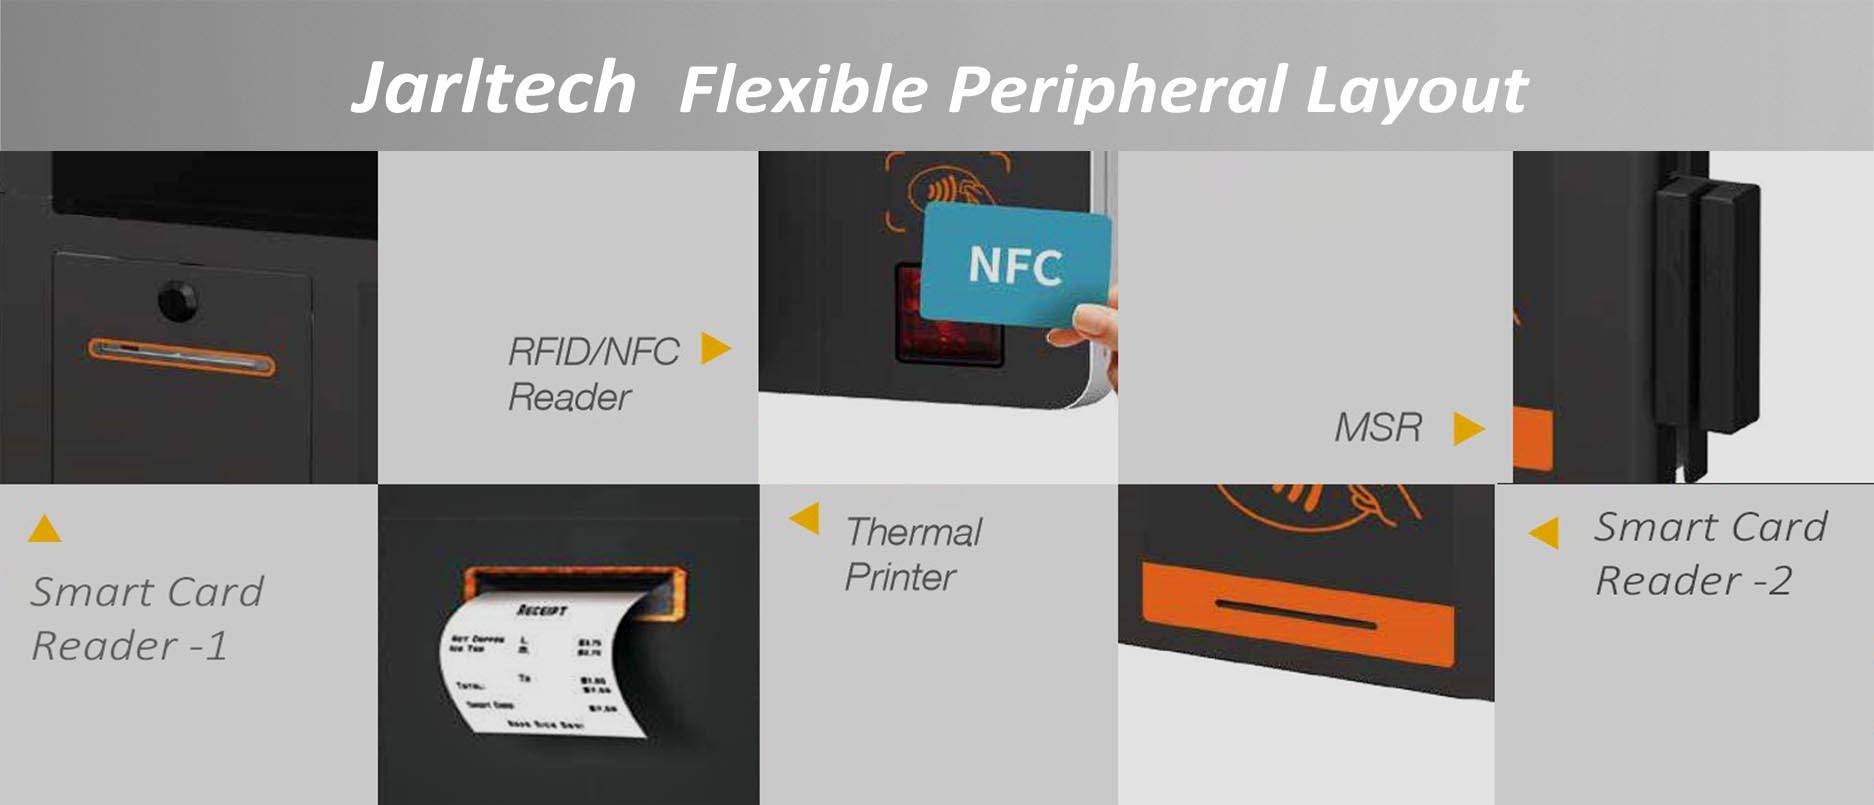 Flexible Peripheral Layout